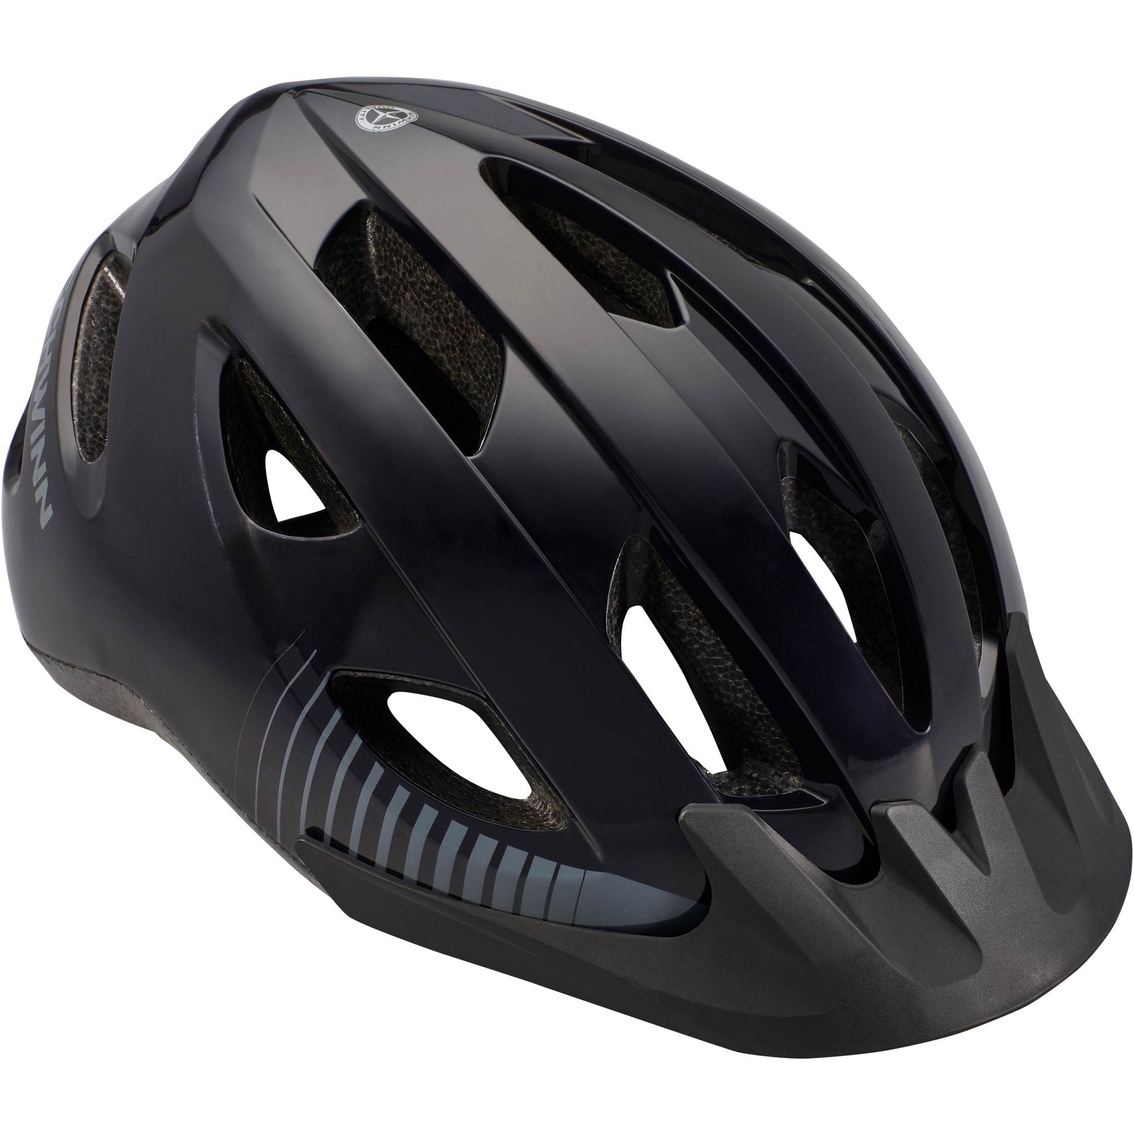 Schwinn Sojourn Adult Bike Helmet | Bike Accessories | Sports ...